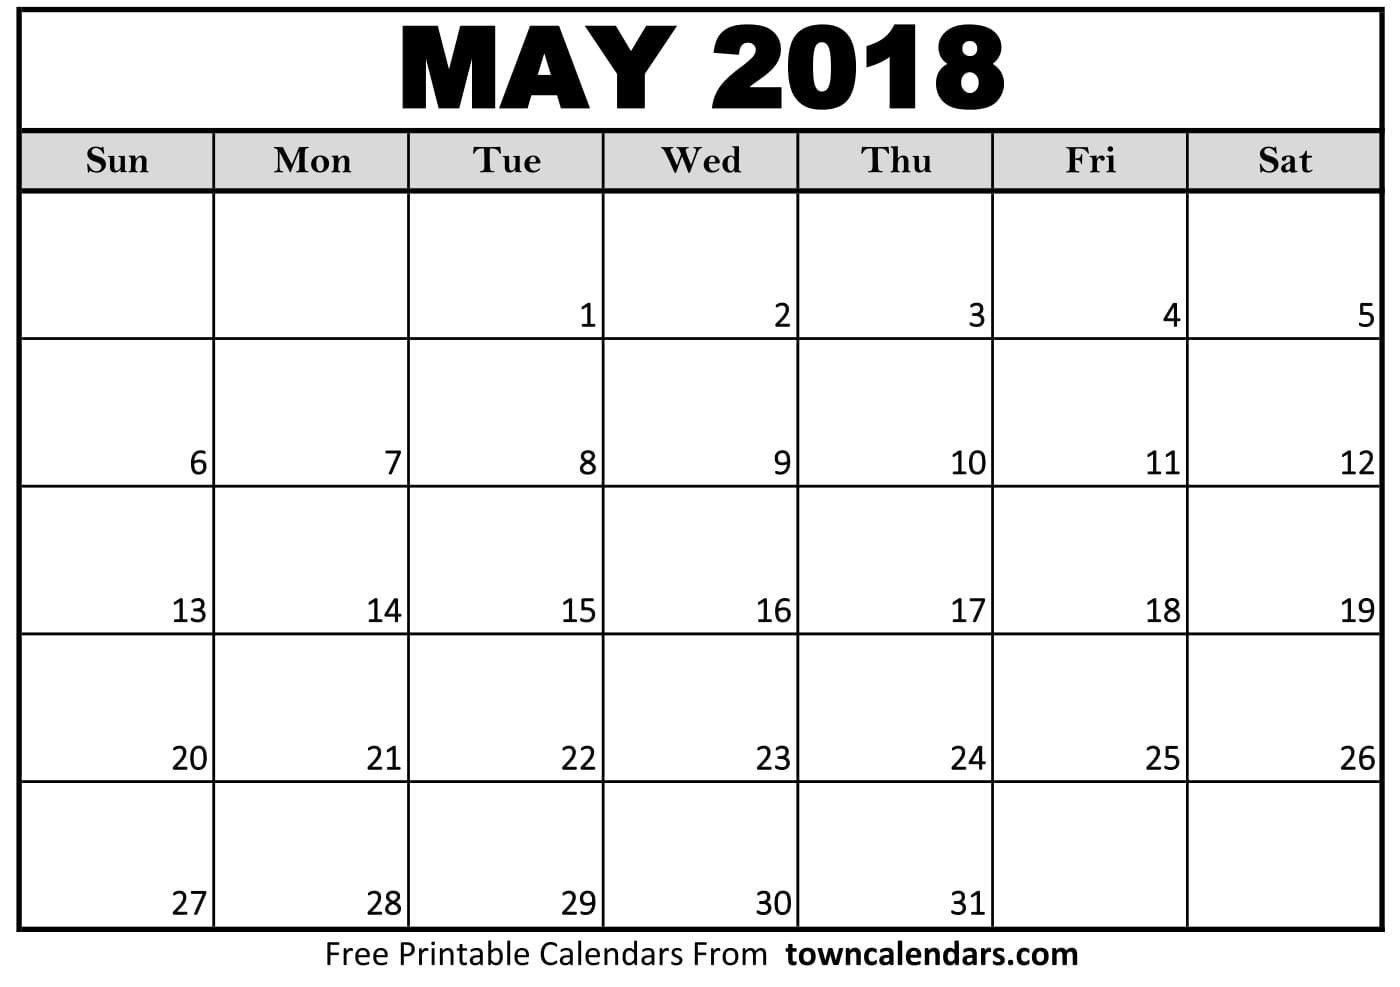 Printable May 2018 Calendar towncalendars